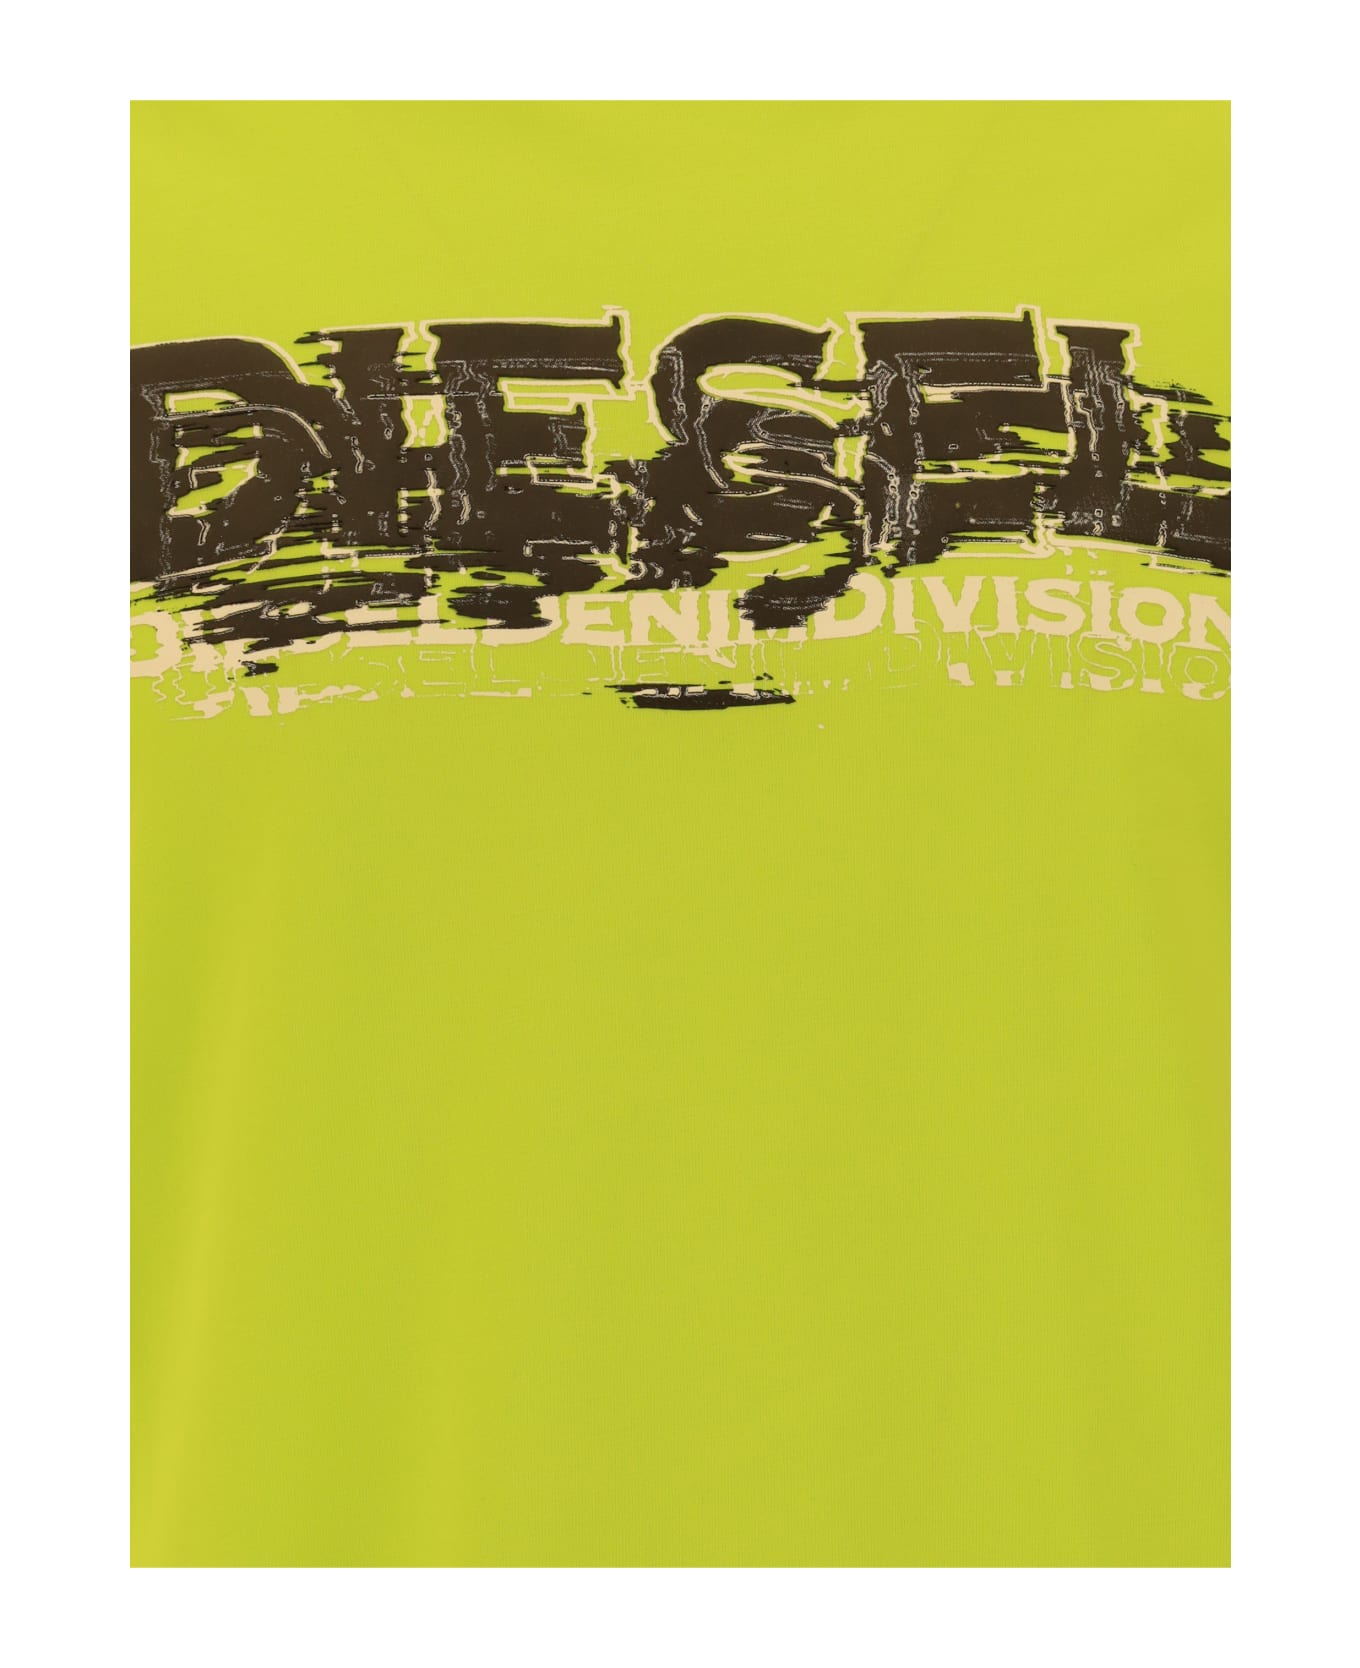 Diesel T-shirt - 313 - Vivid Green シャツ